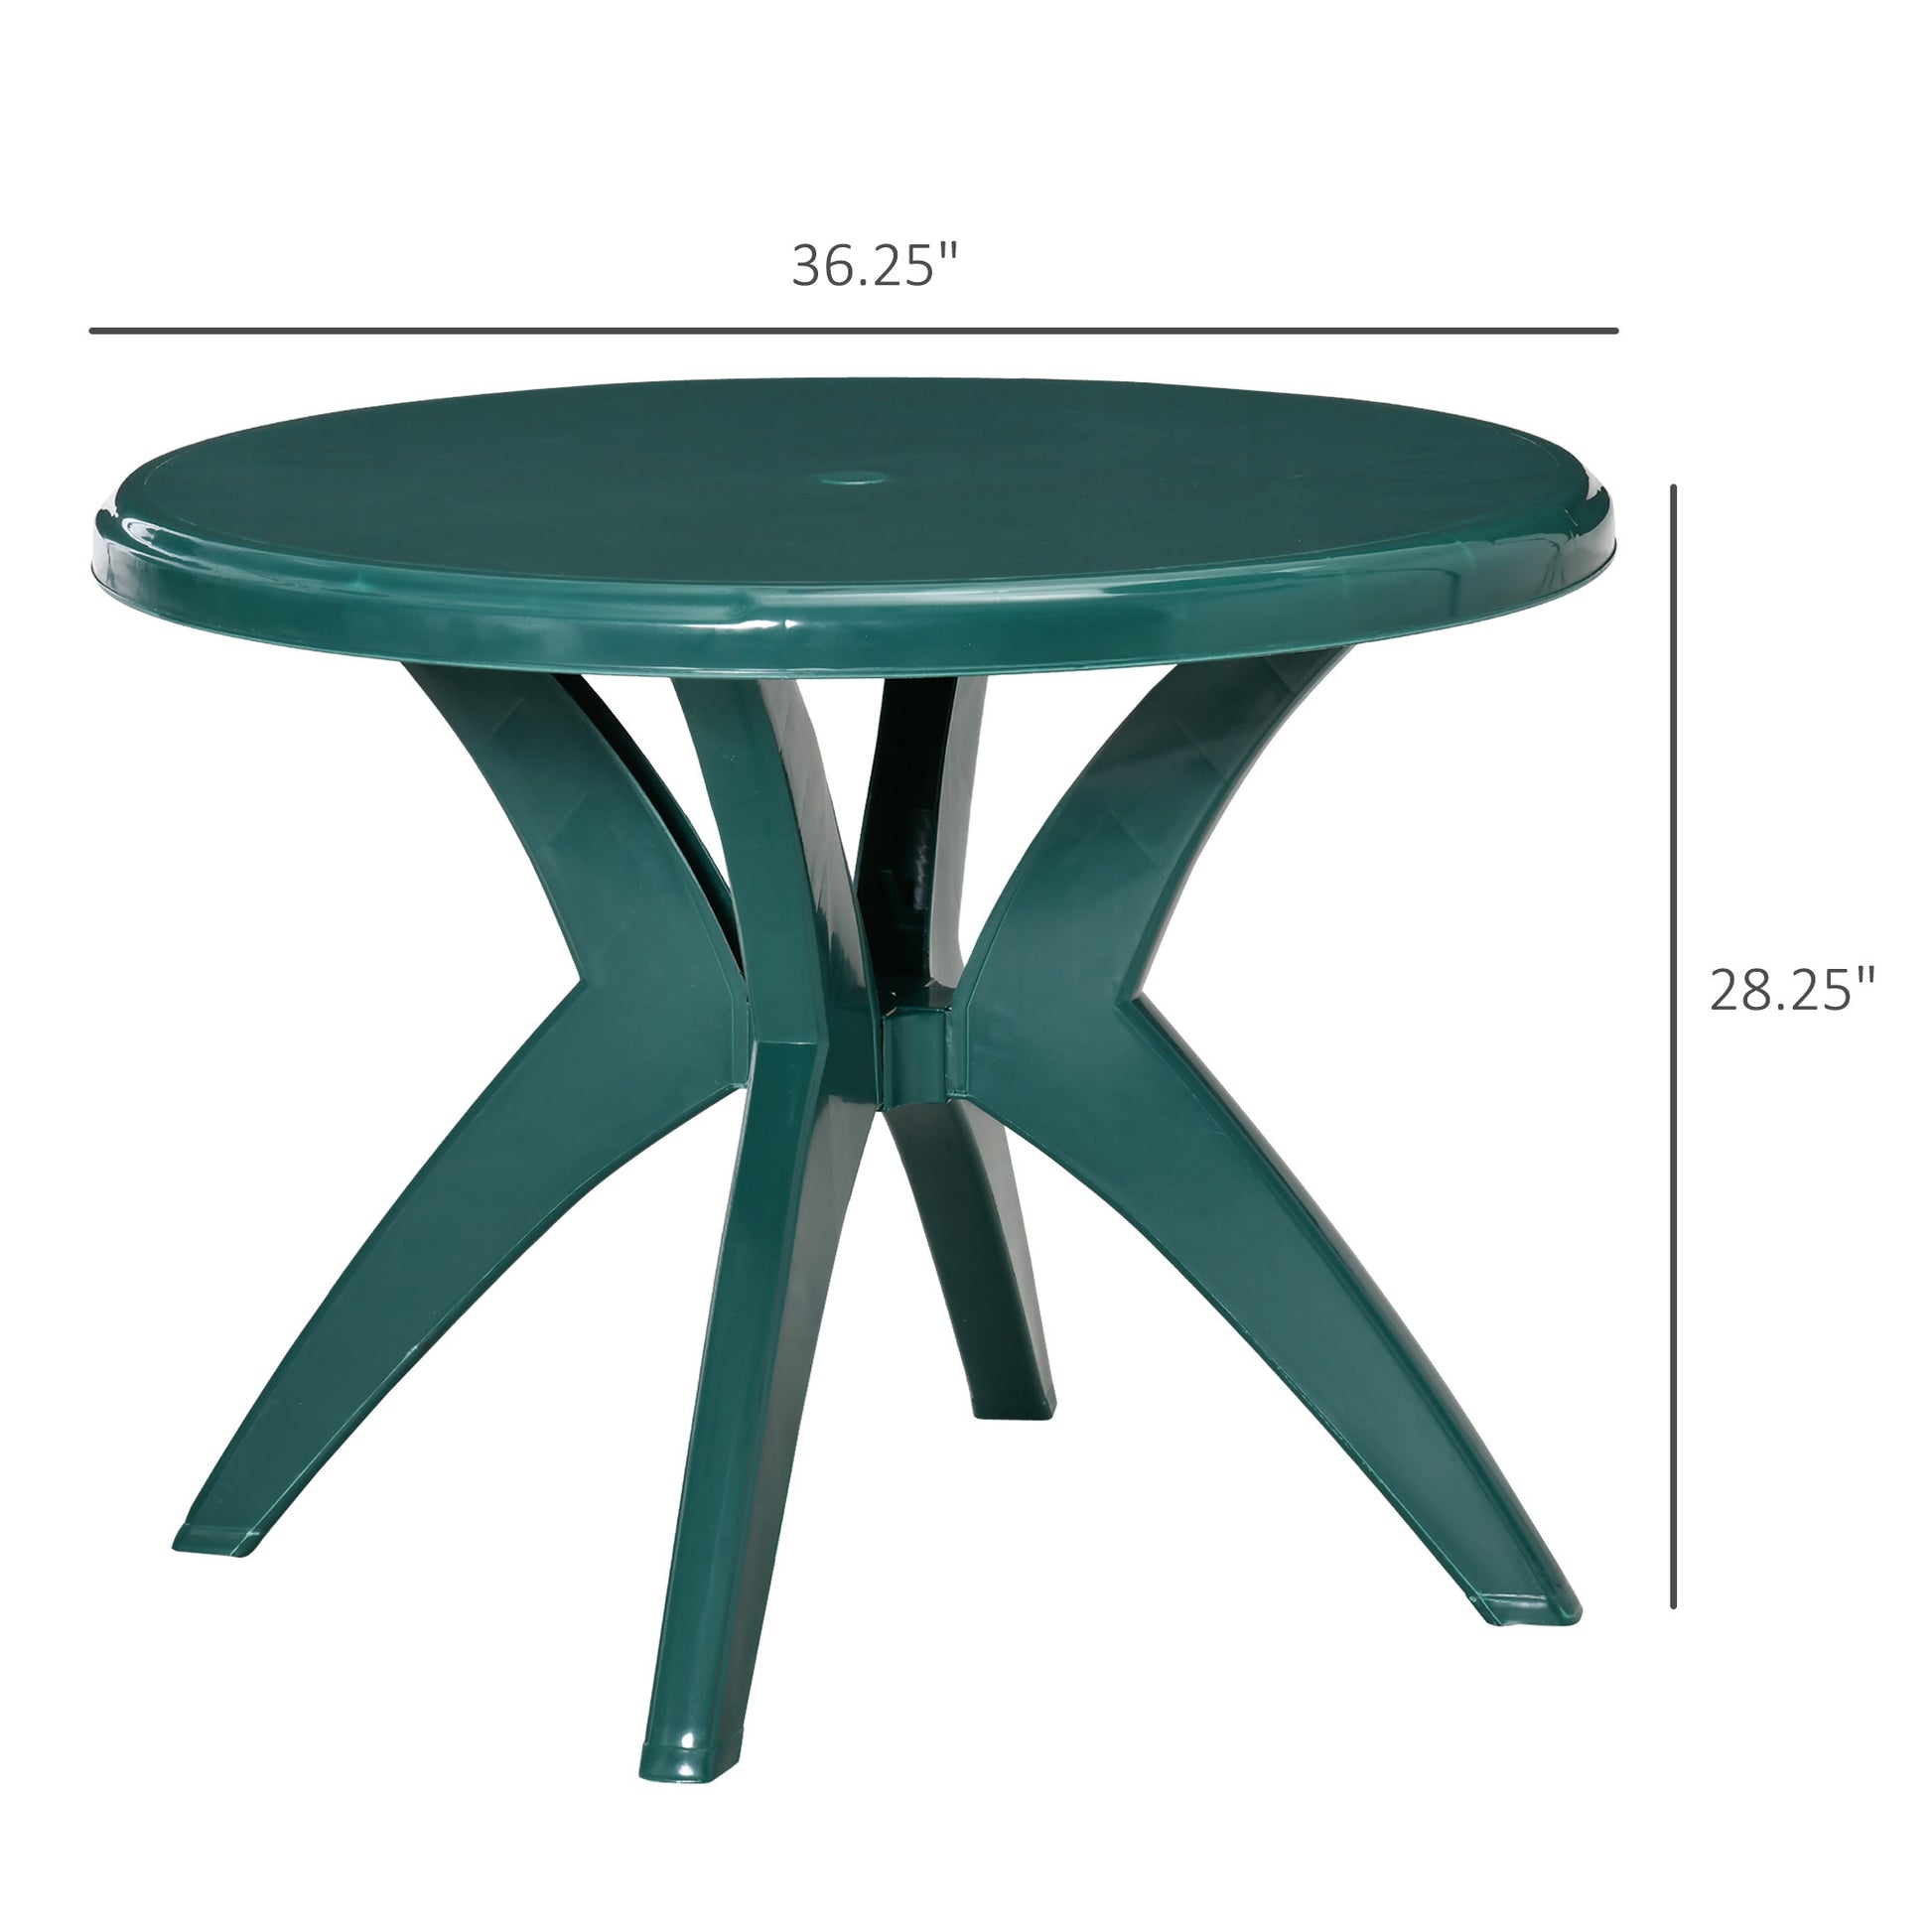 Outsunny 36.25" Dia Round Plastic Patio Table